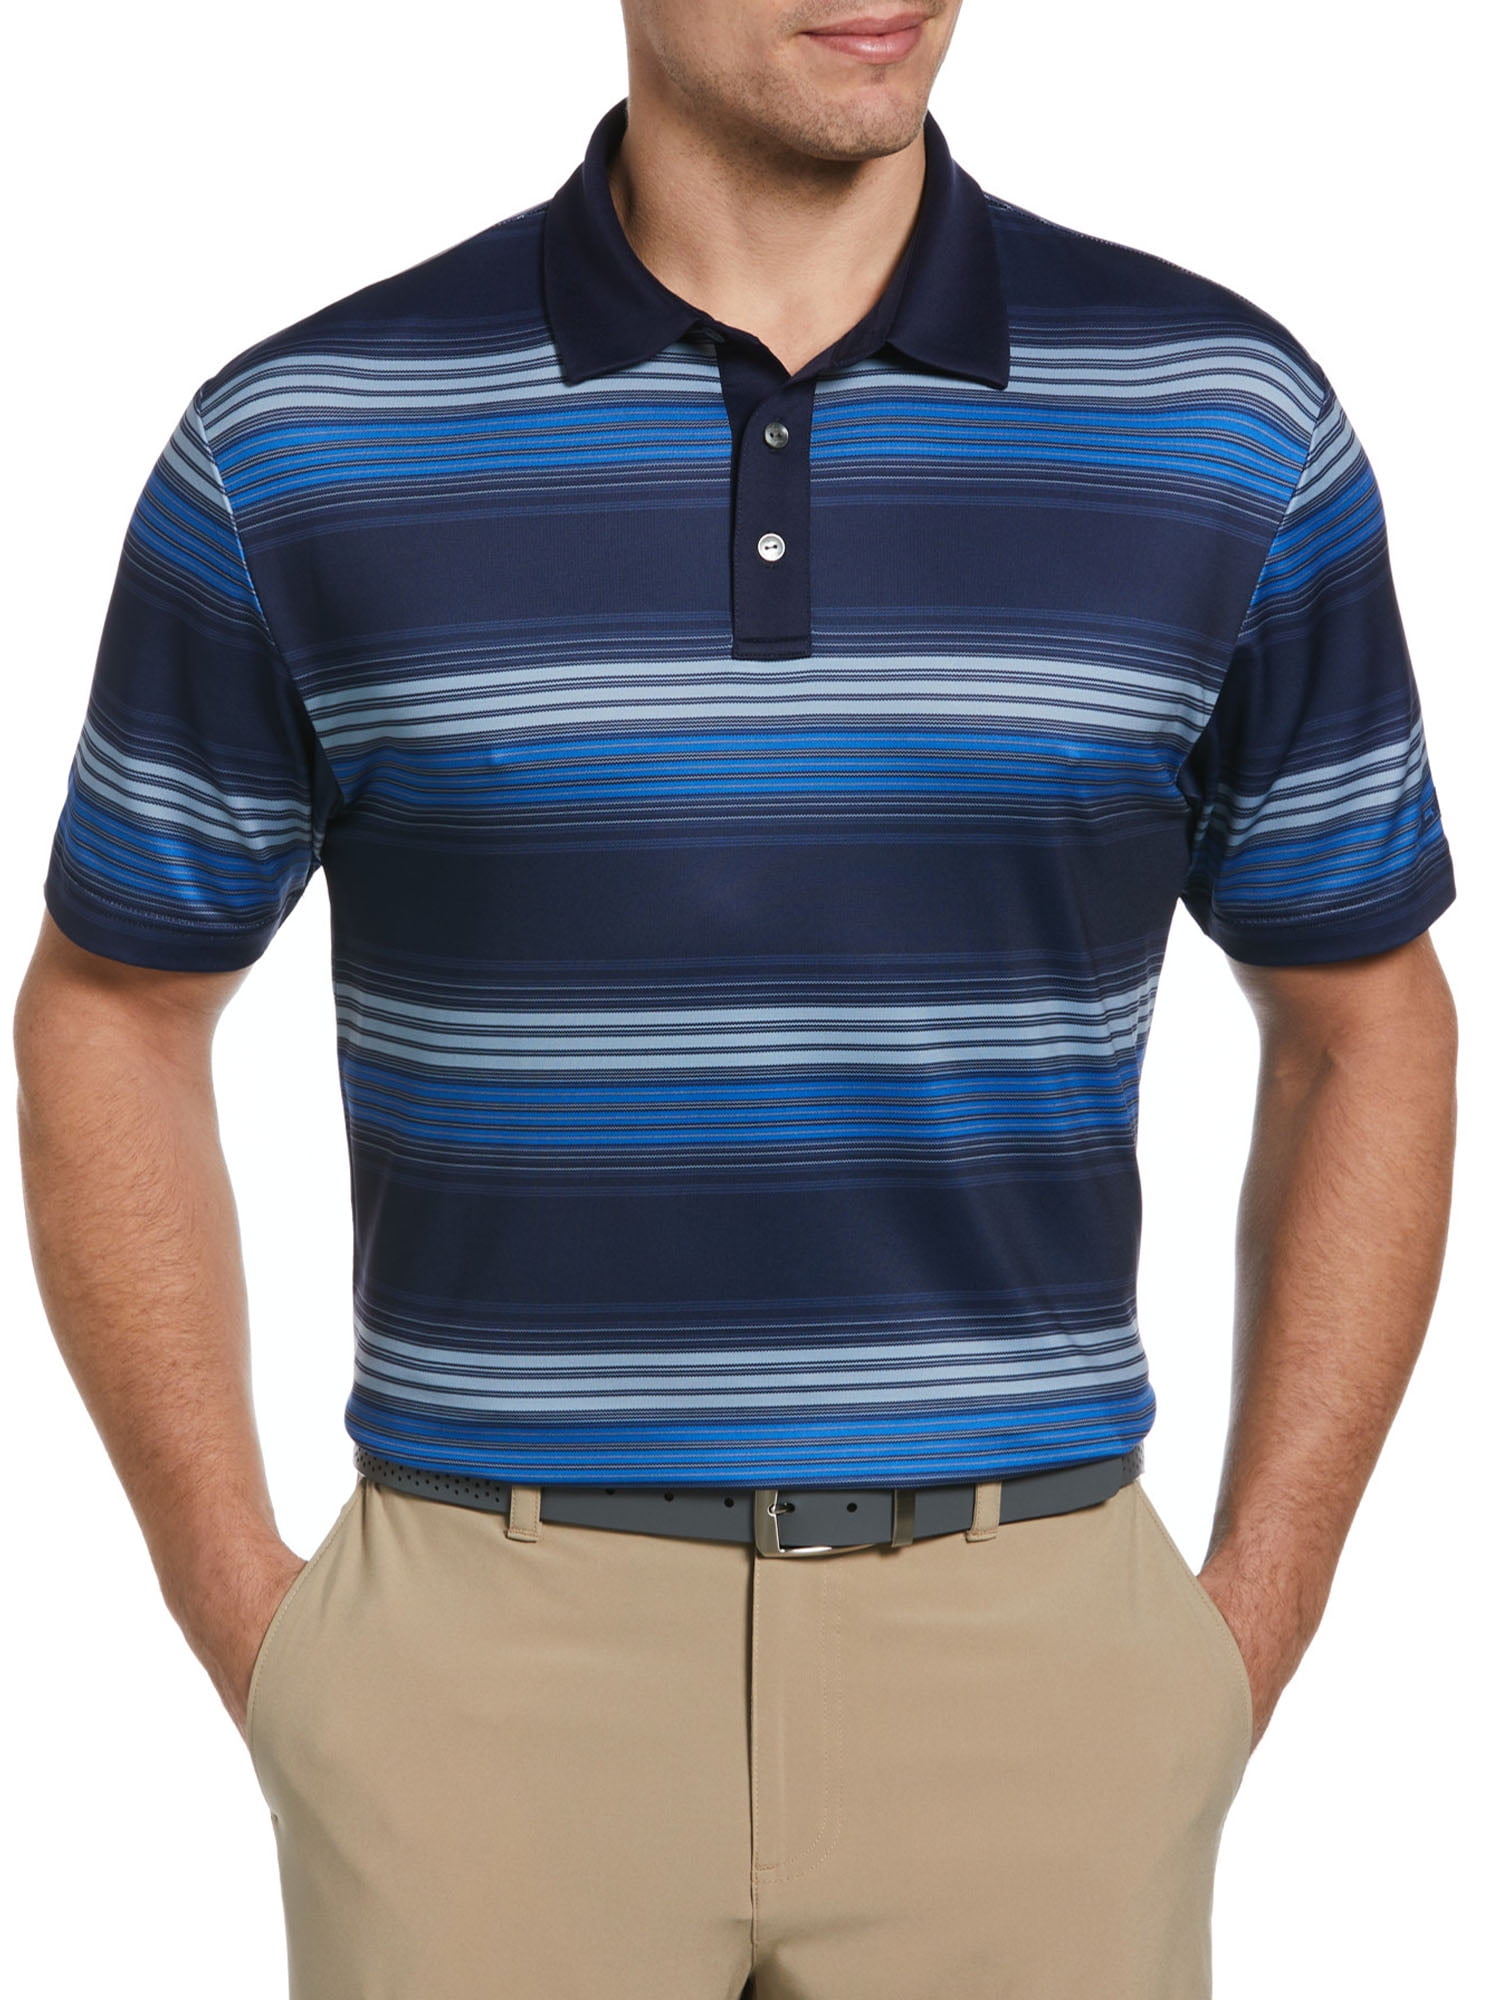 Ben Hogan Men’s Striped Performance Golf Polo Shirt with UV Protection ...